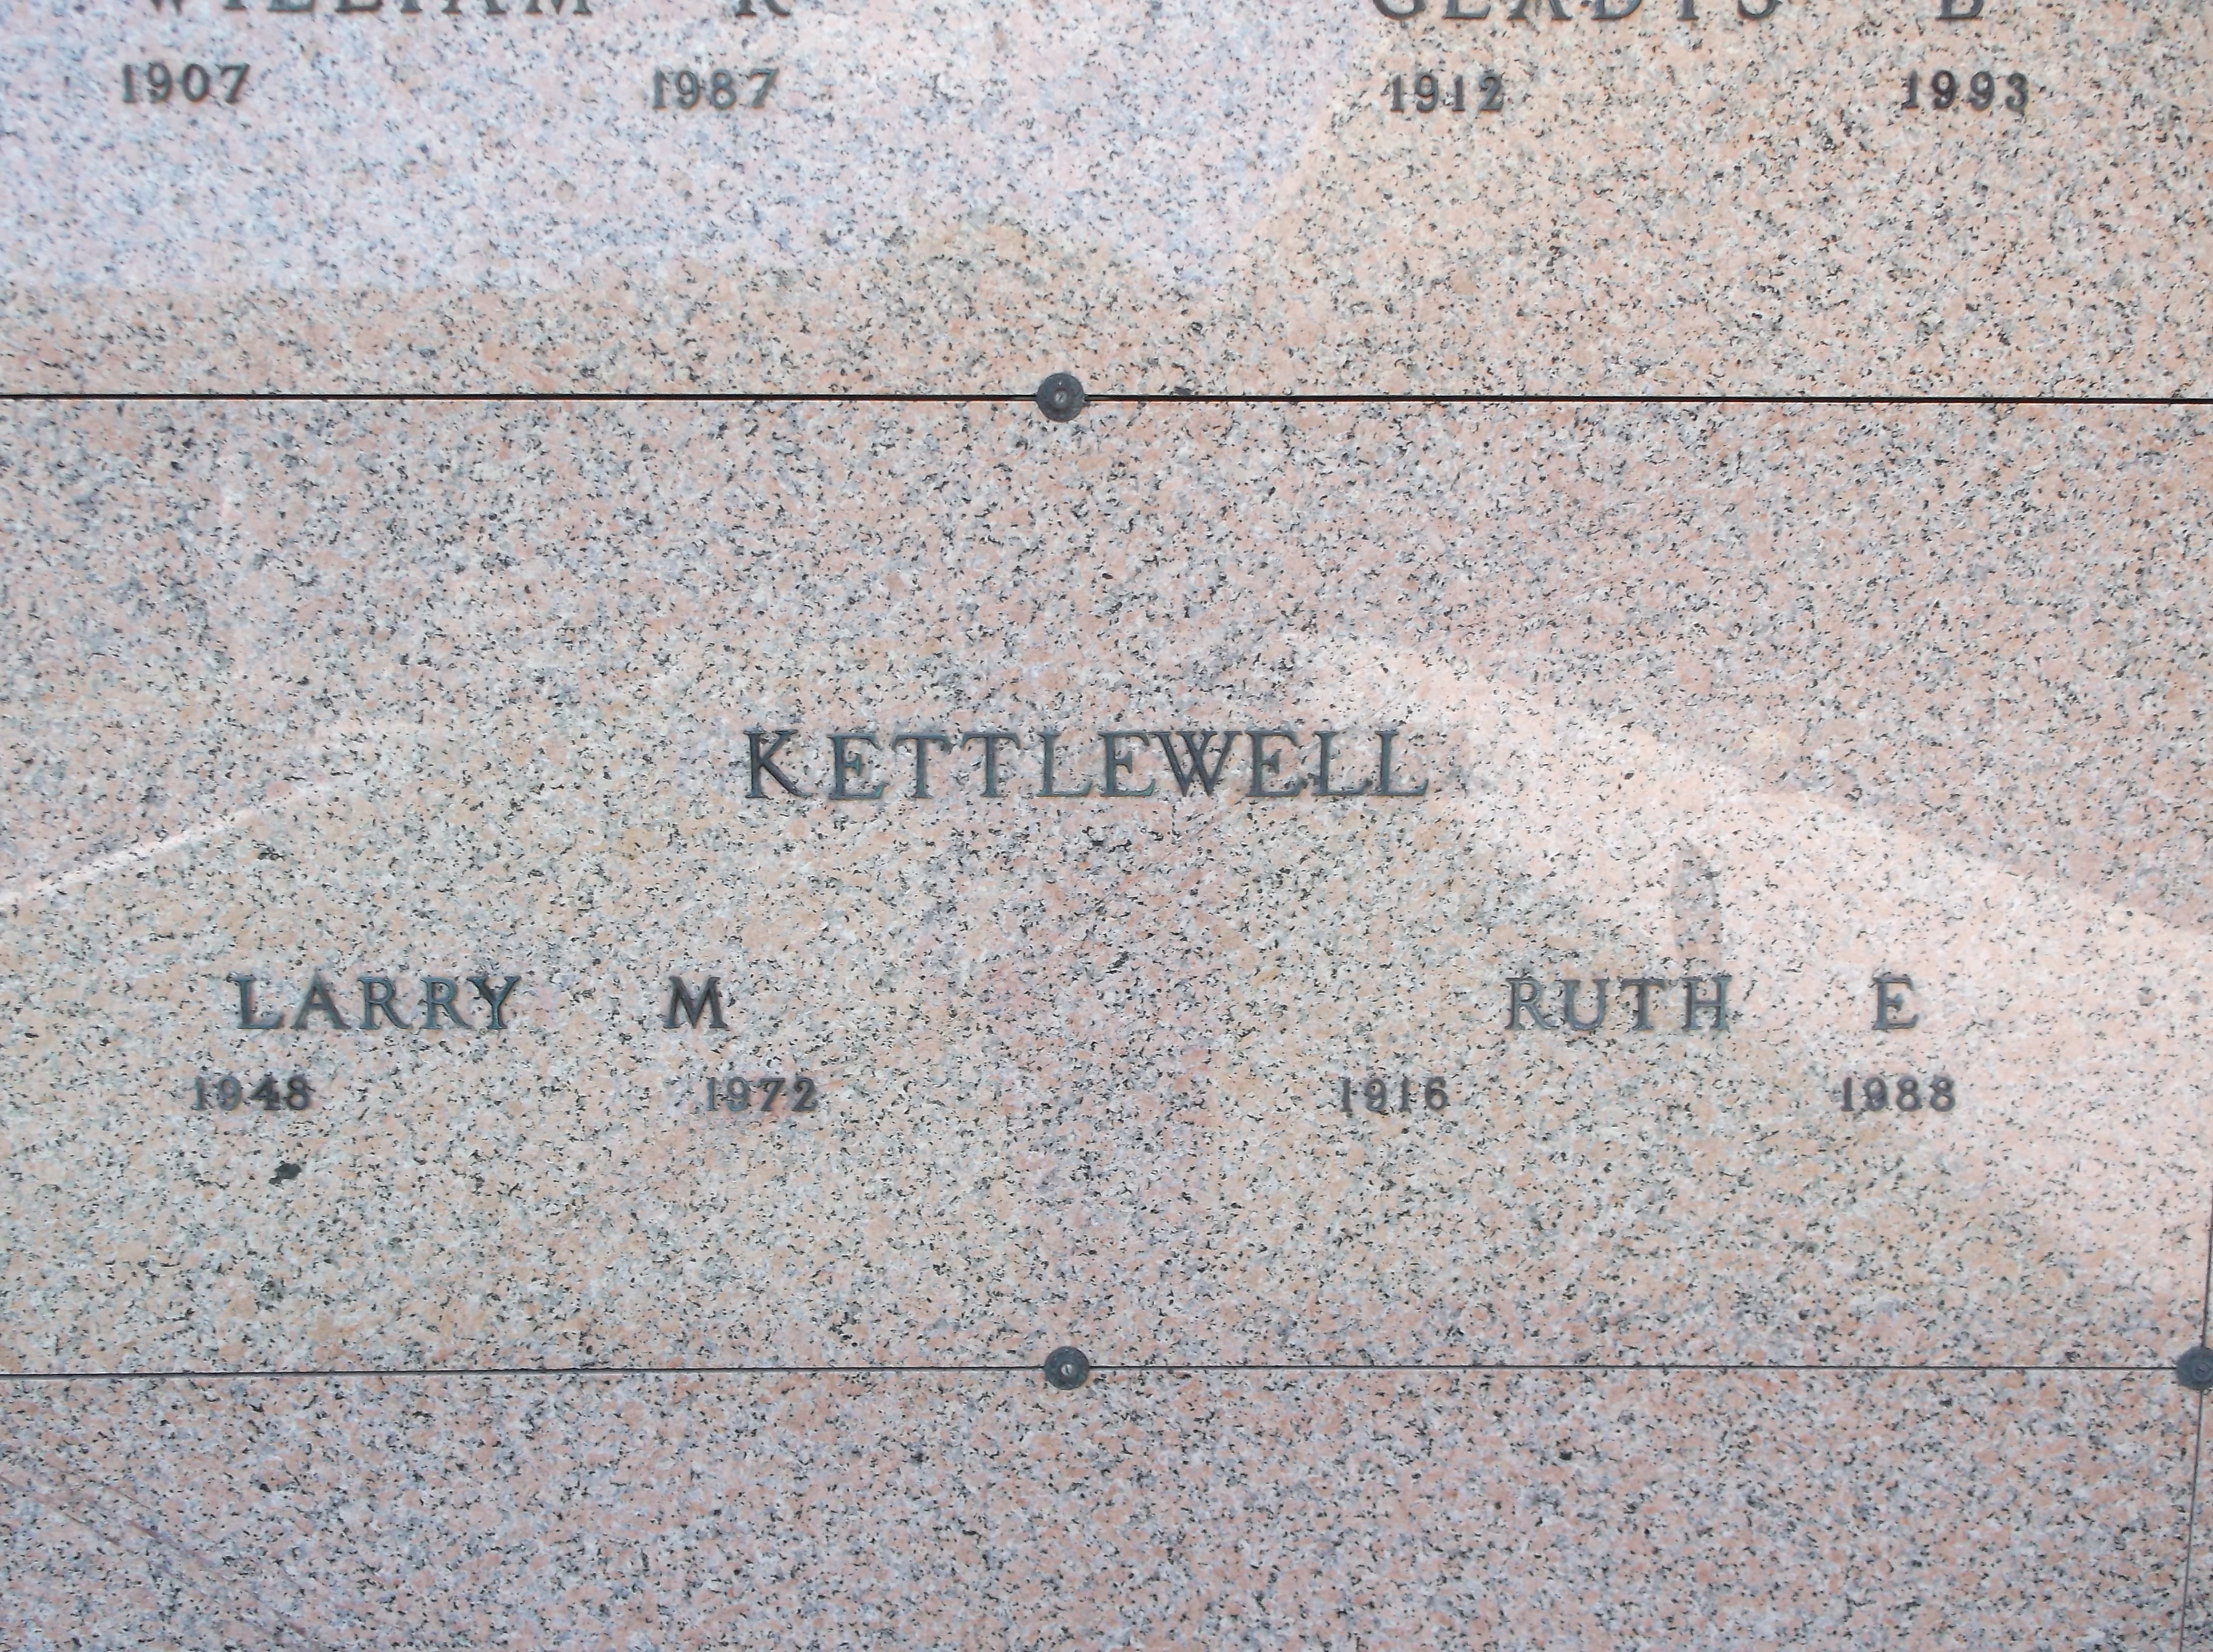 Ruth E Kettlewell